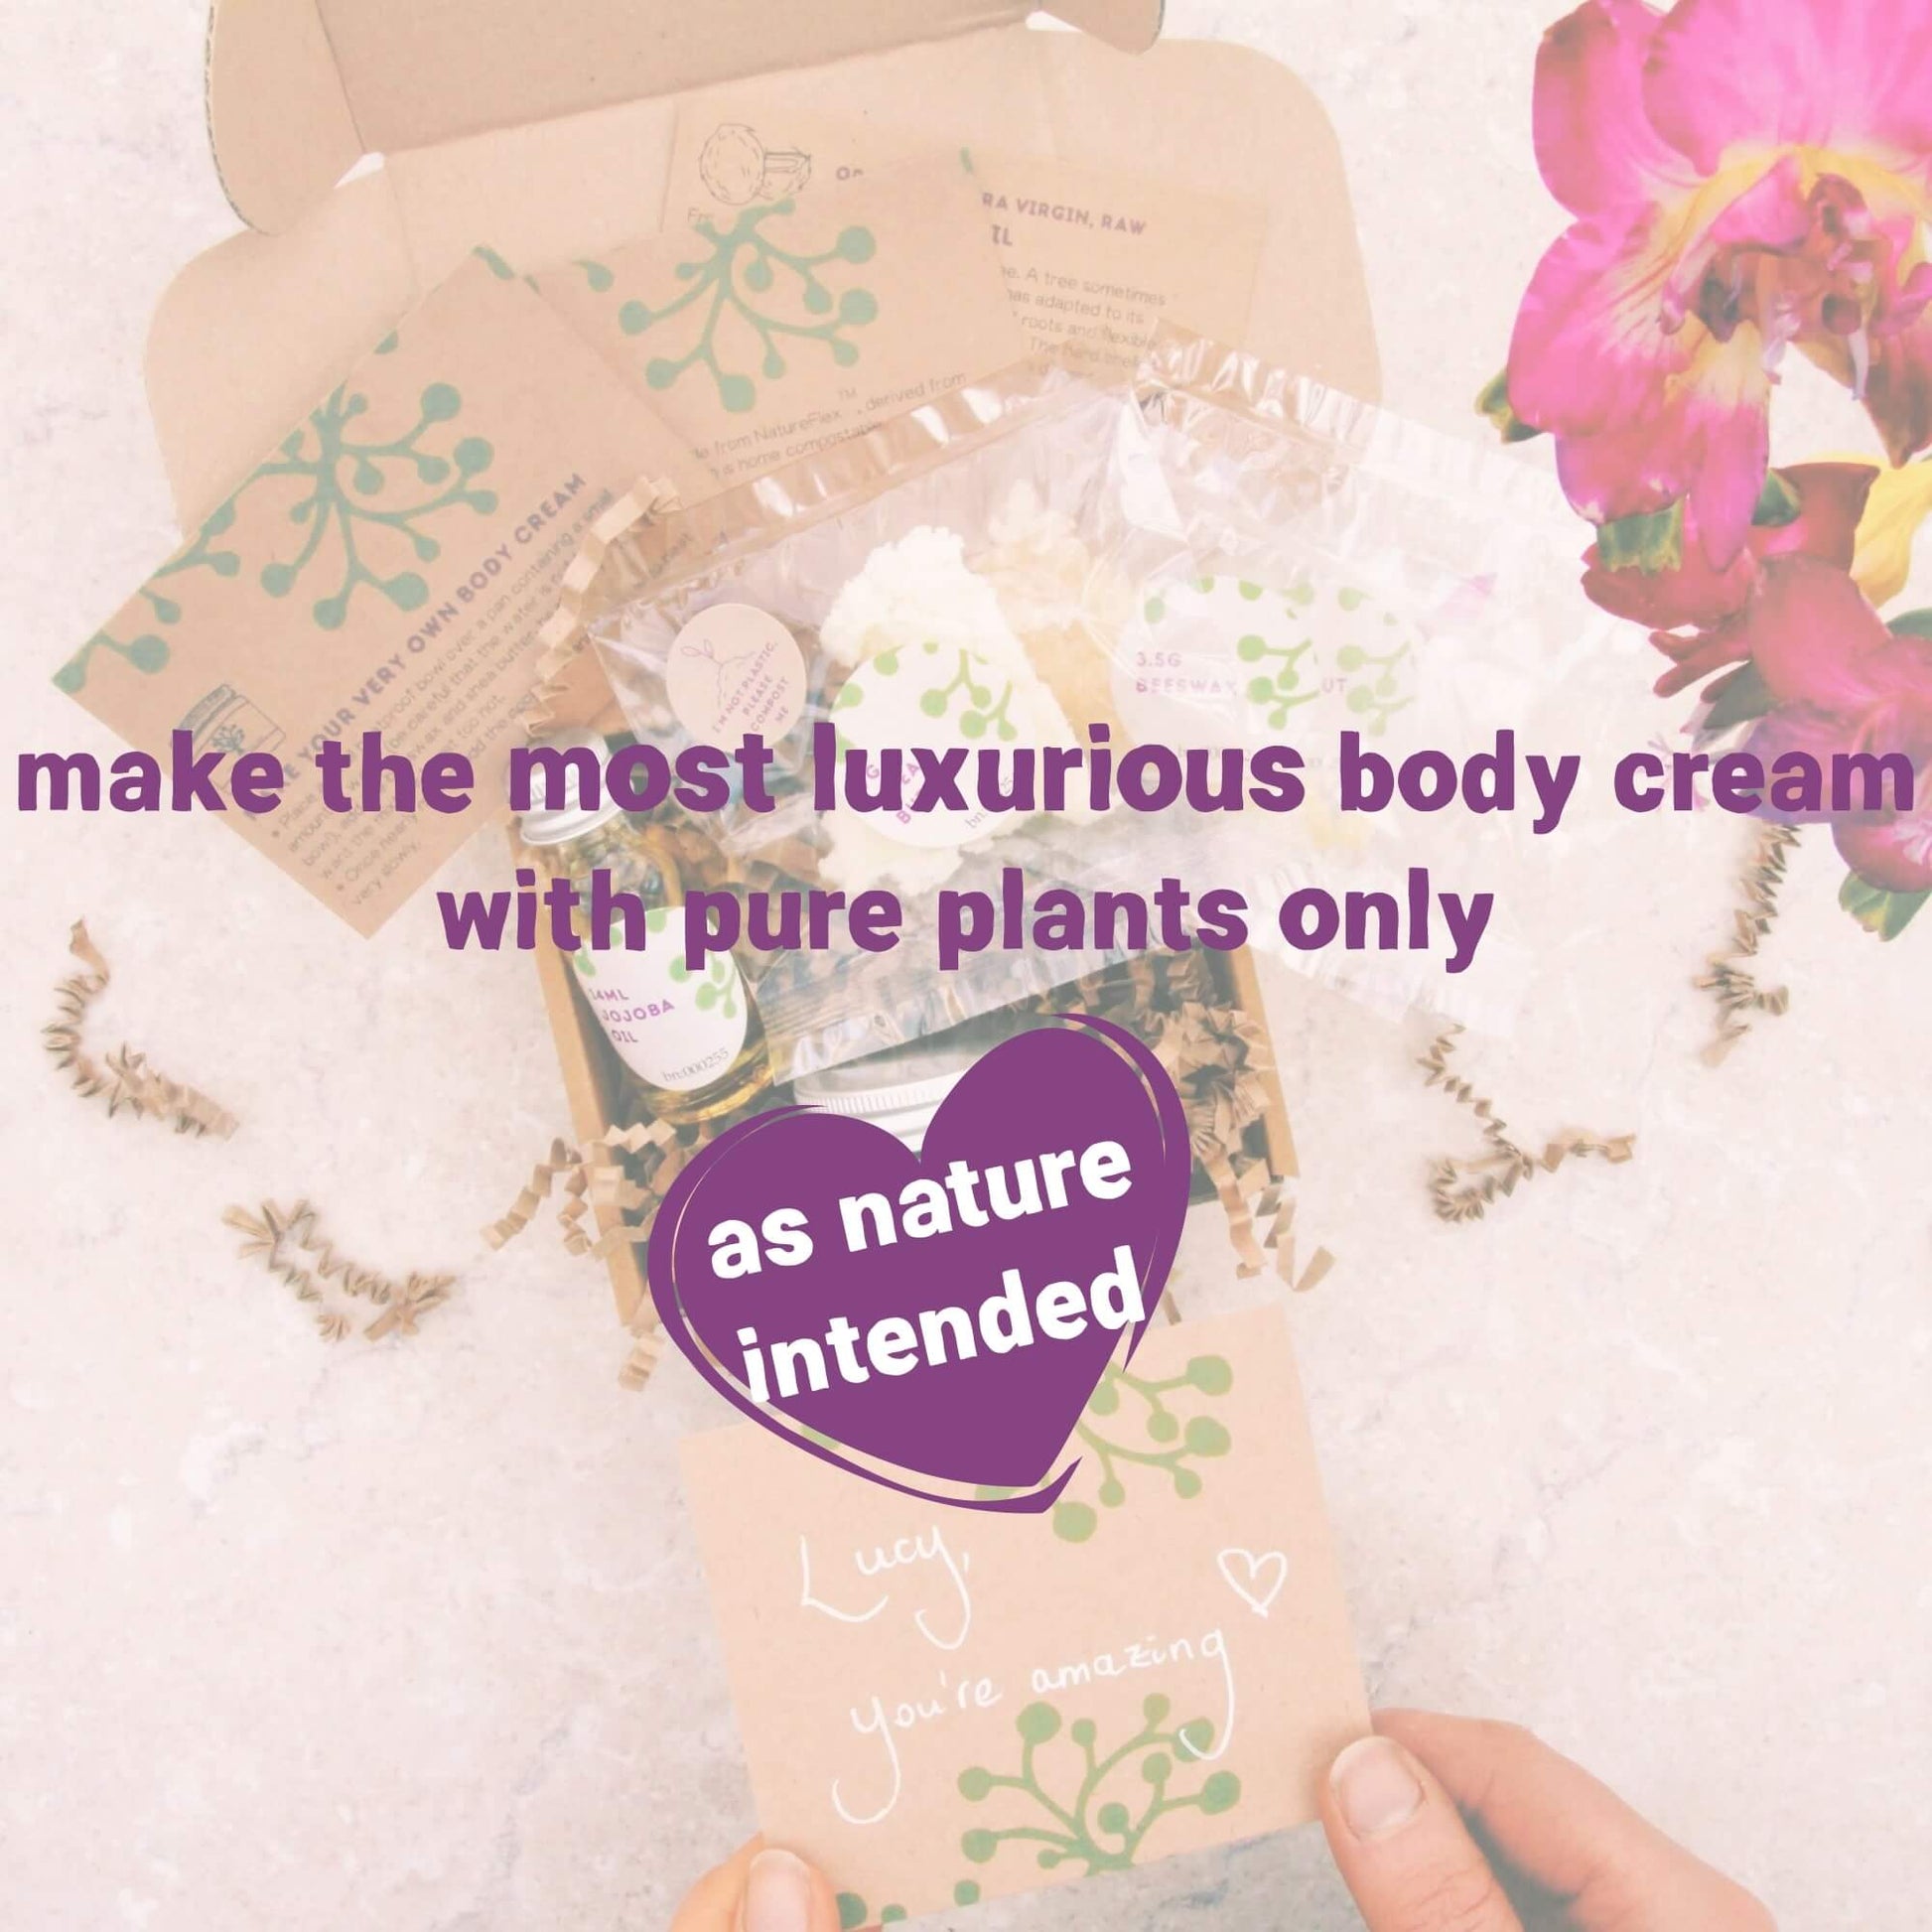 eco-friendly all natural body cream kit inside gift box for mum